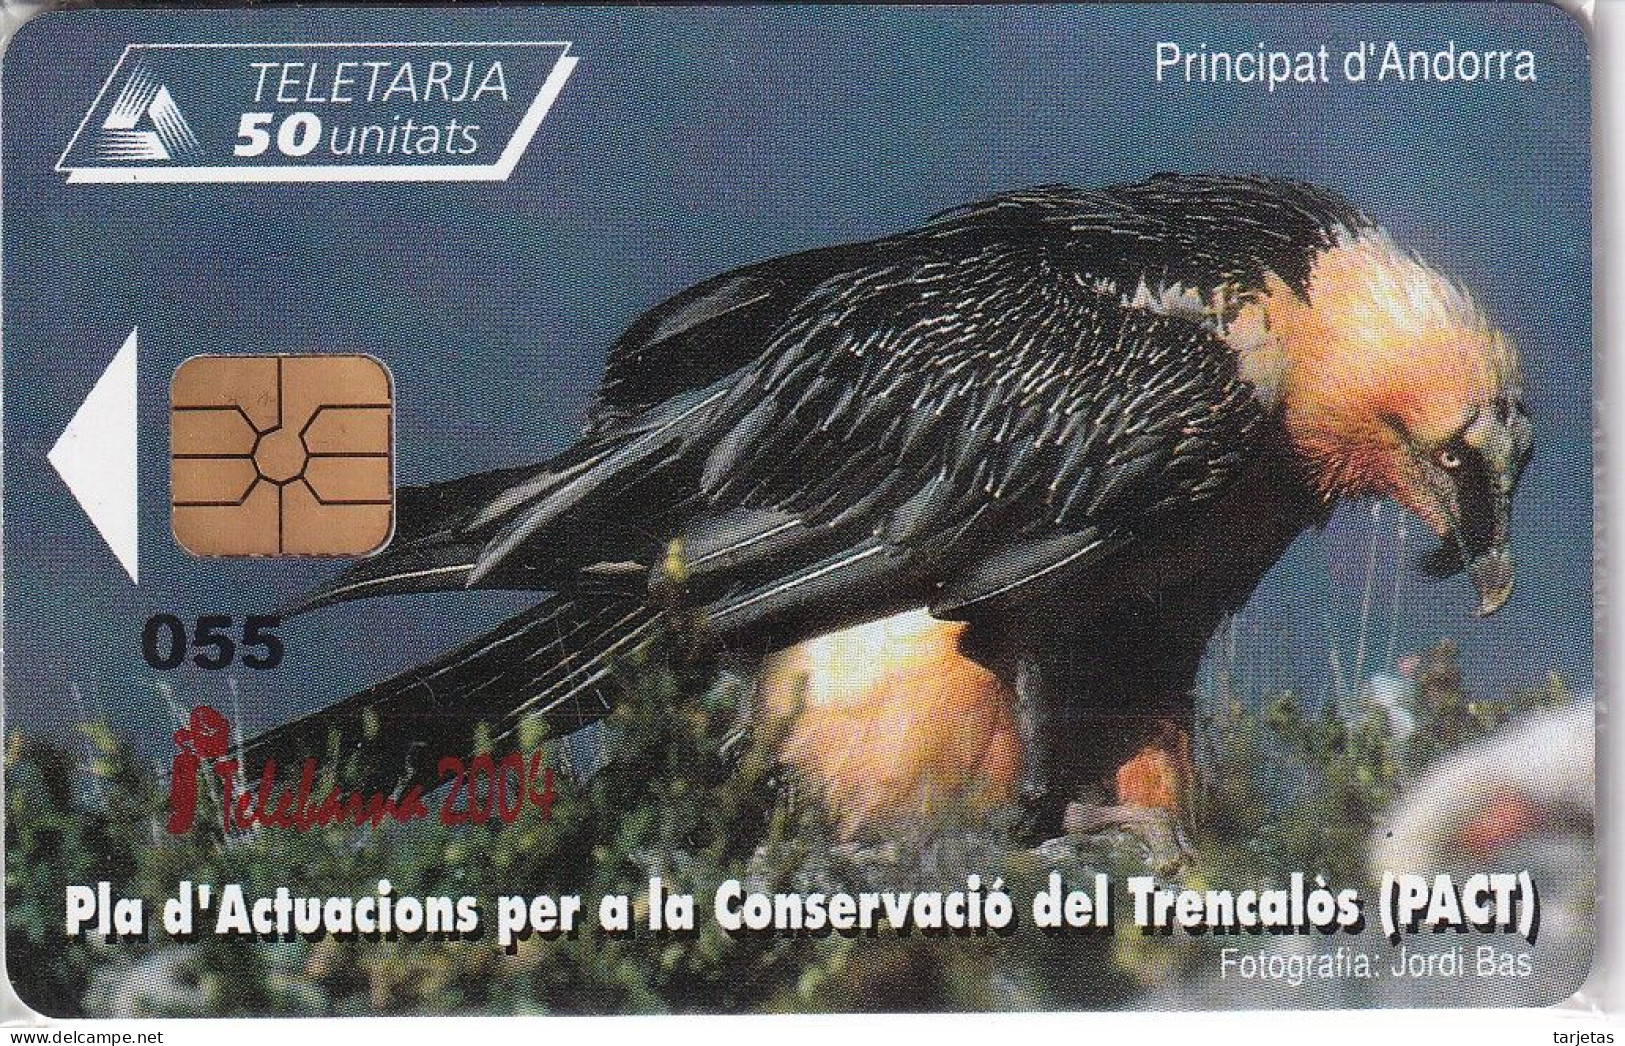 AND-143/a TARJETA DE ANDORRA DEL QUEBRANTAHUESOS (TELEBARNA 2004) (BIRD-PAJARO) NUEVA-MINT CON BLISTER - Andorre